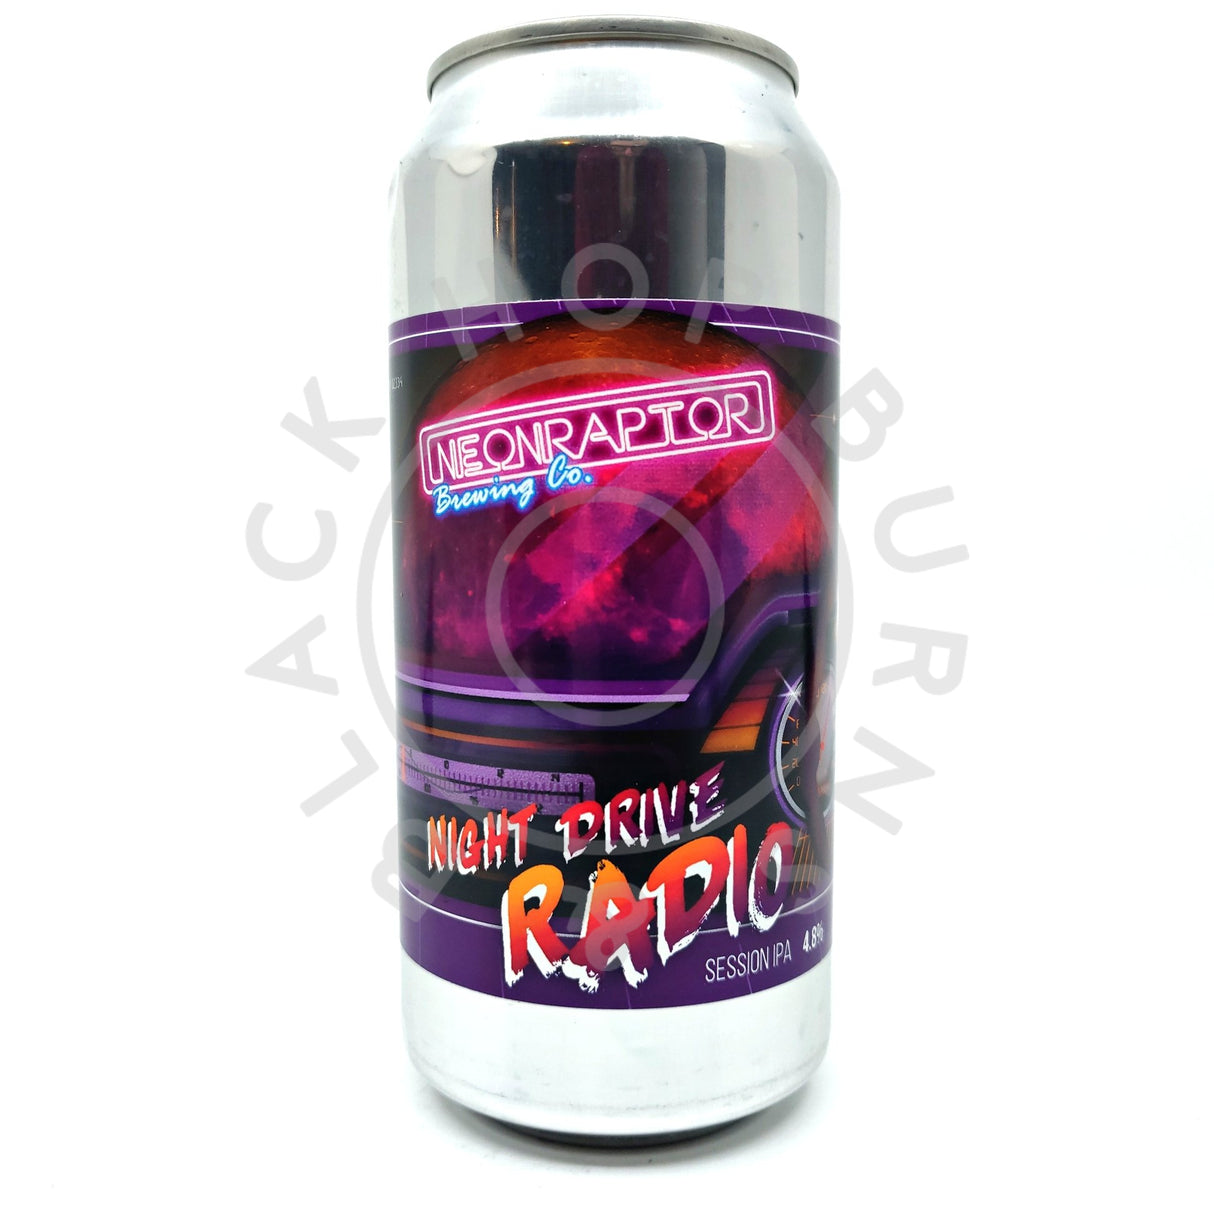 Neon Raptor Night Drive Radio Pale Ale 4.8% (440ml can)-Hop Burns & Black